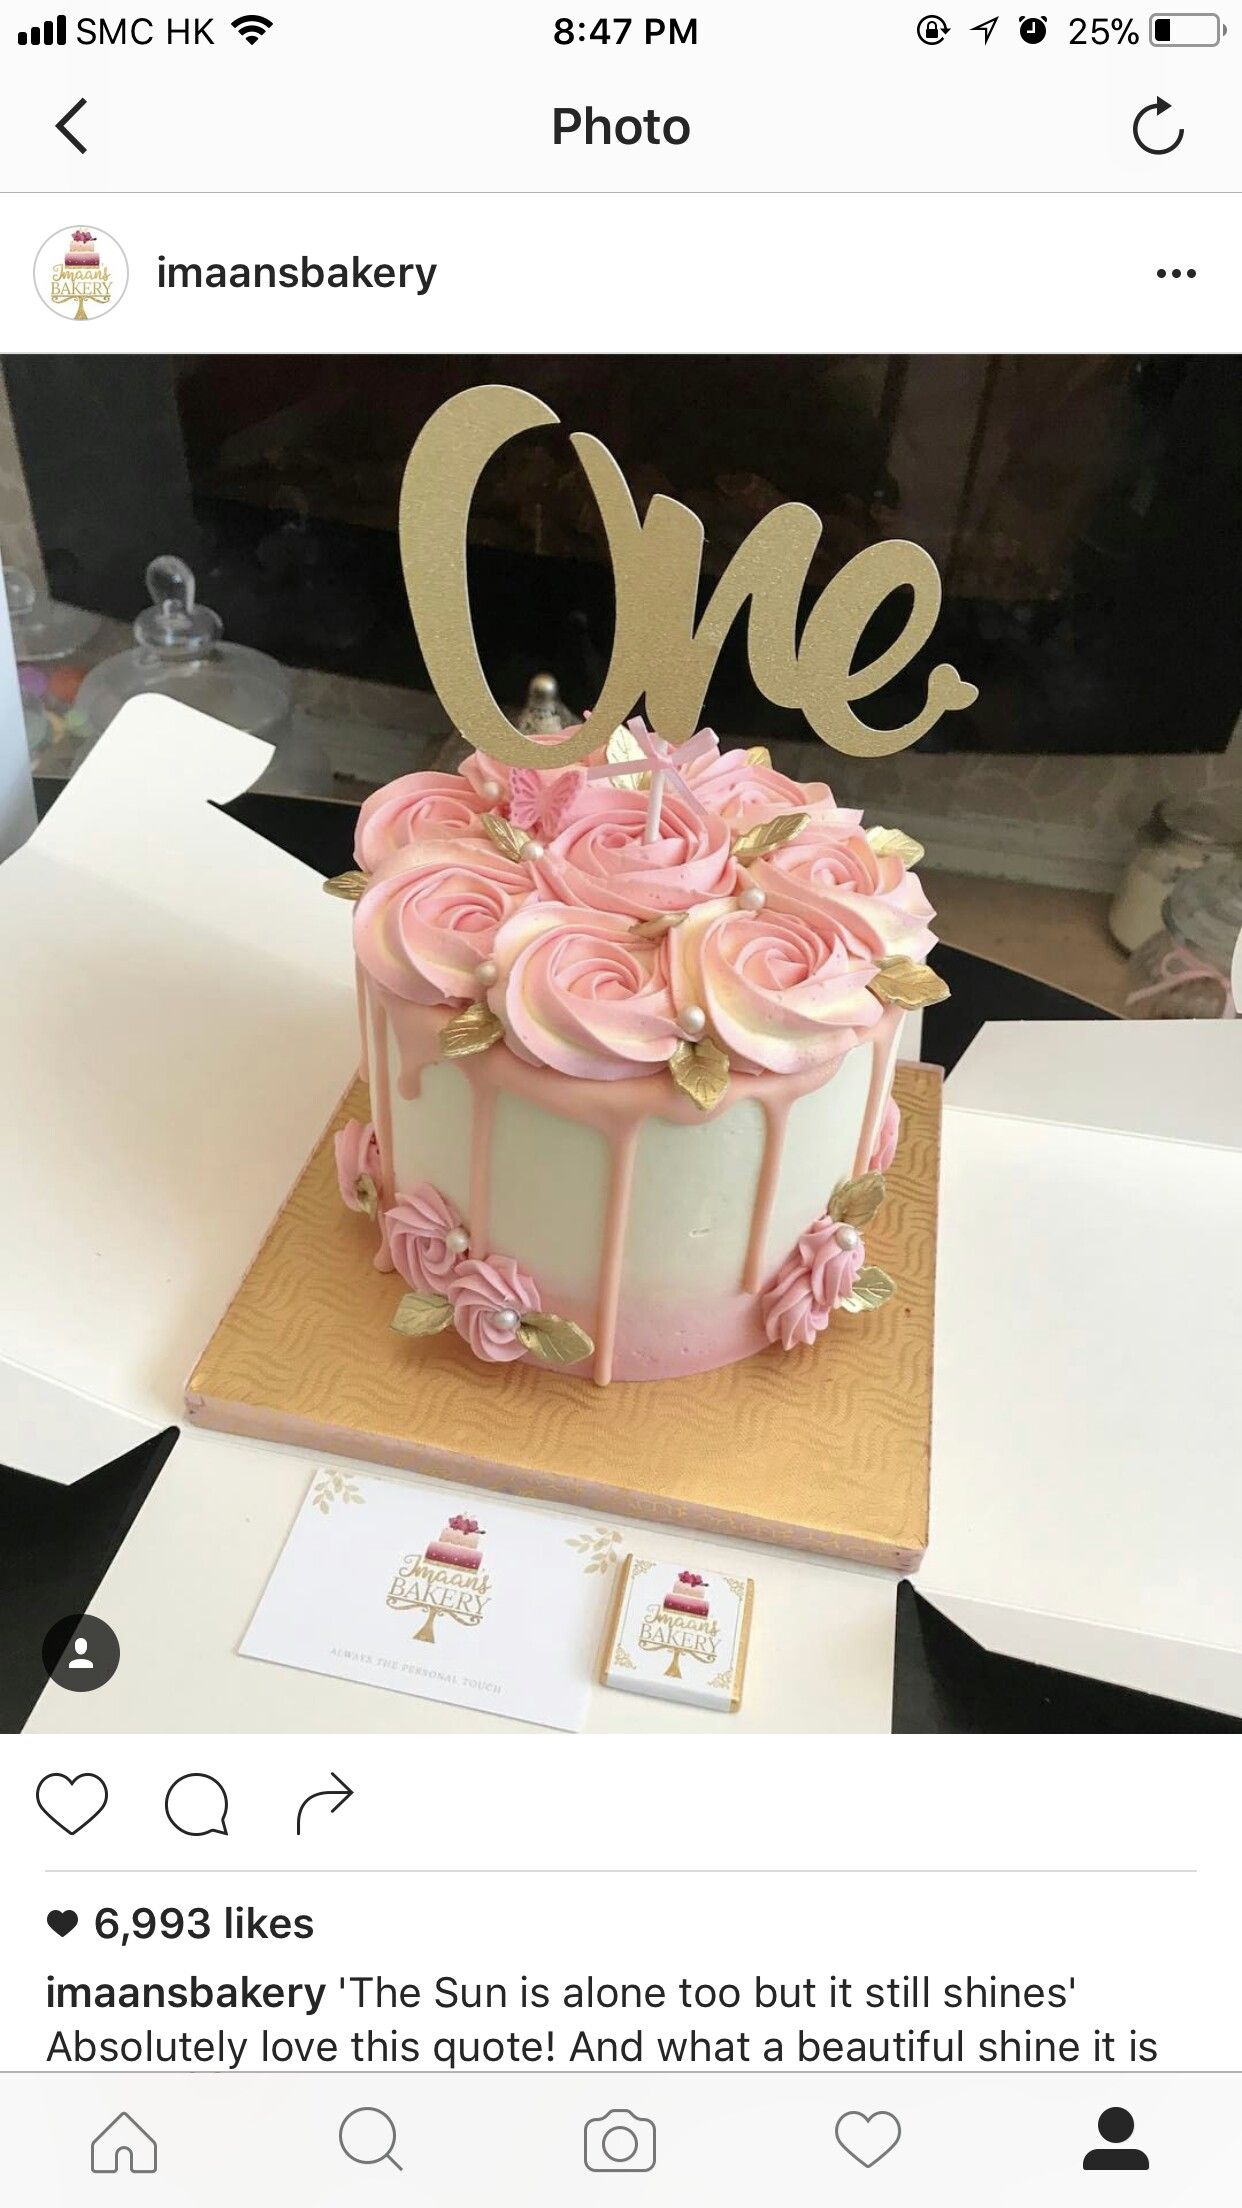 Tortendeko 50 Geburtstag Luxus Smash Cake for Madelyn